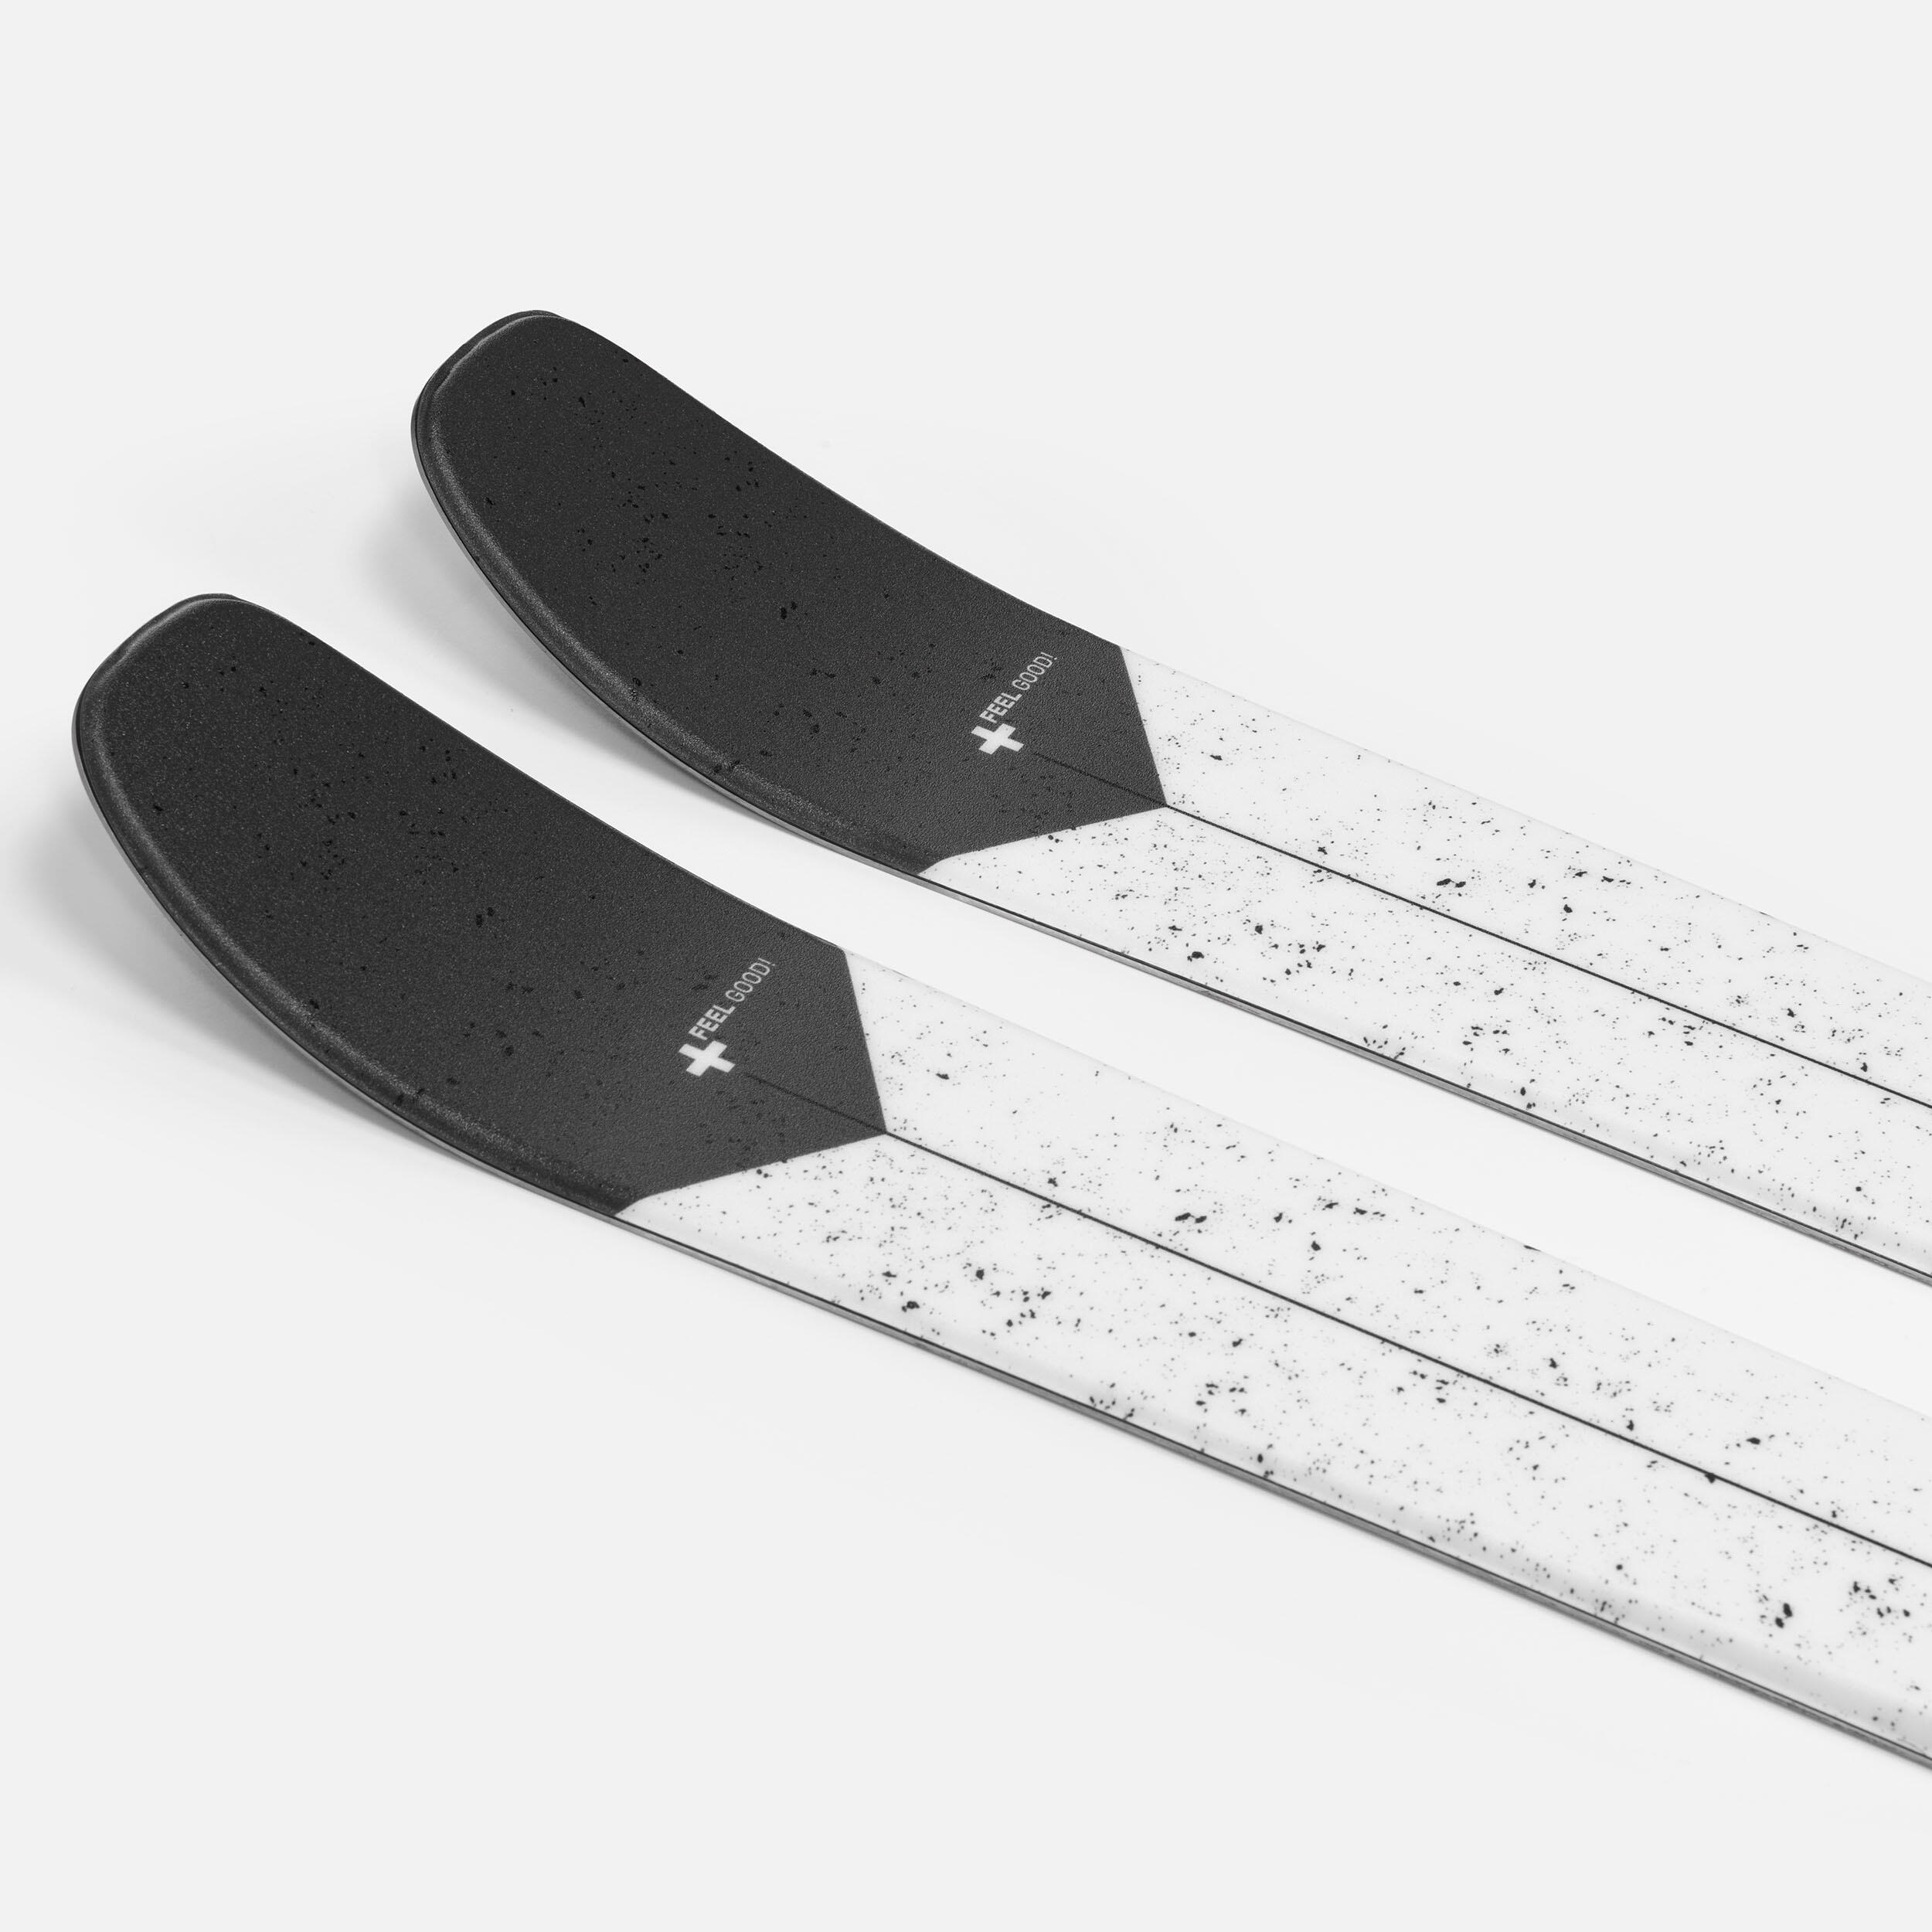 Skis alpins avec fixation homme – Cross 150+ noir/blanc - WEDZE